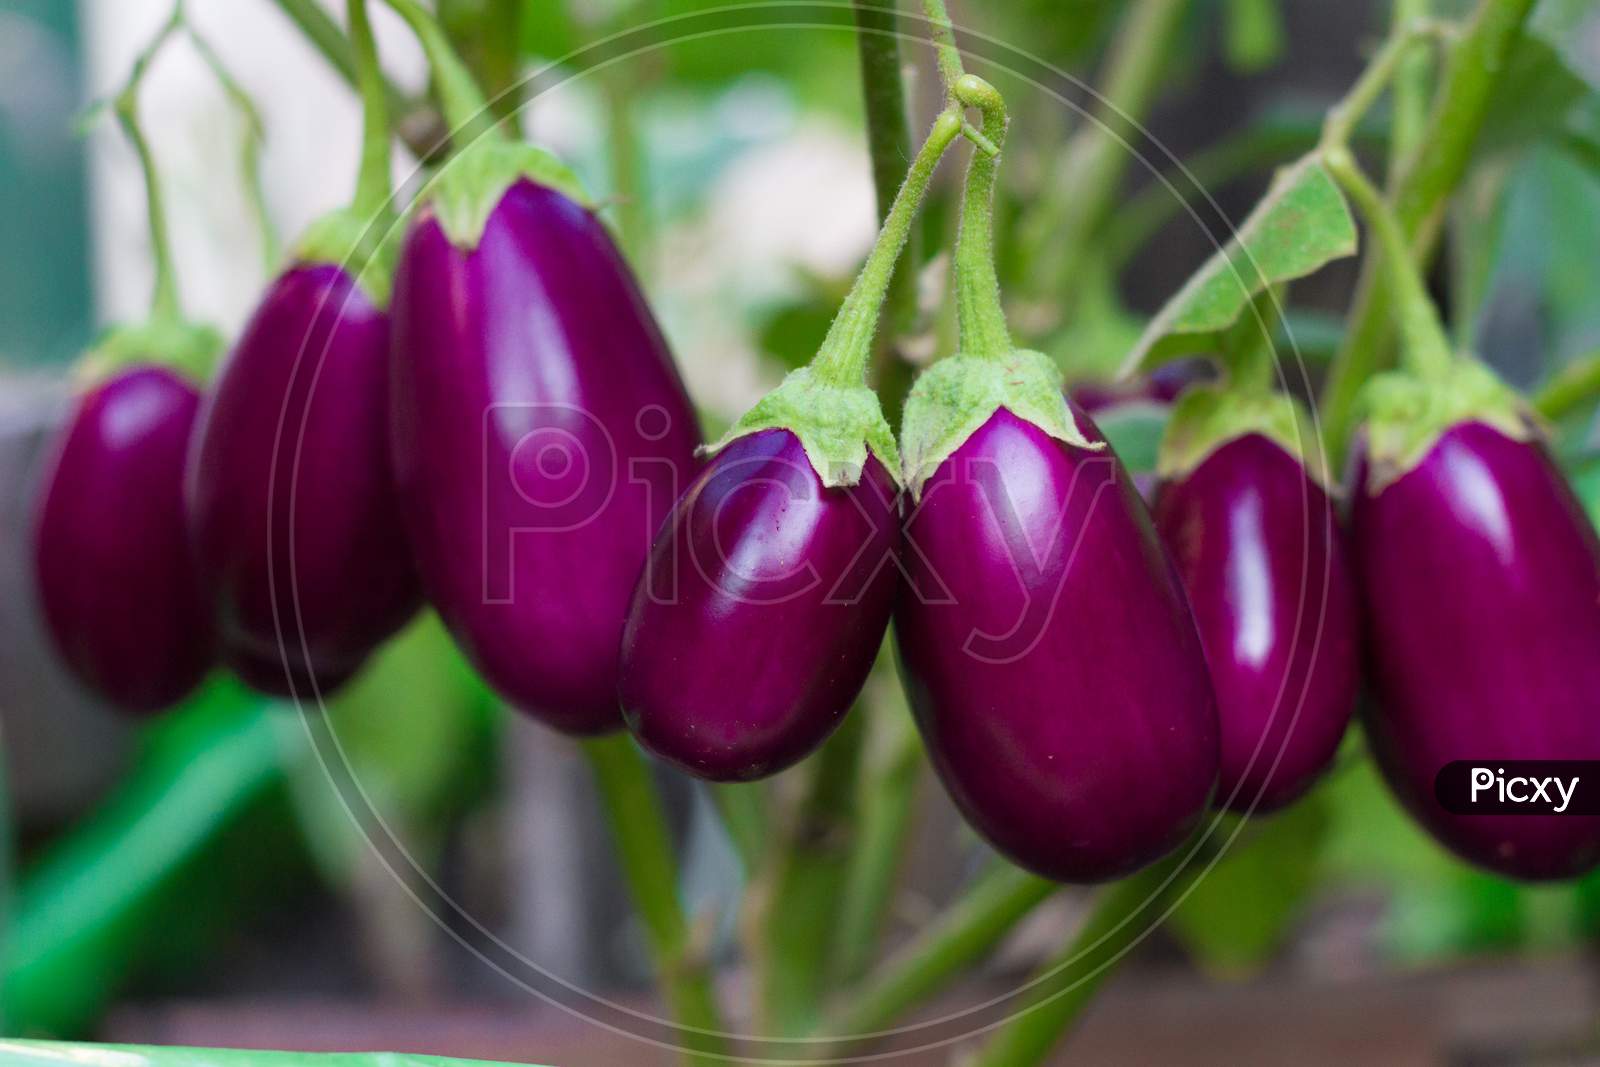 Mature Eggplants In The Organic Garden Plant